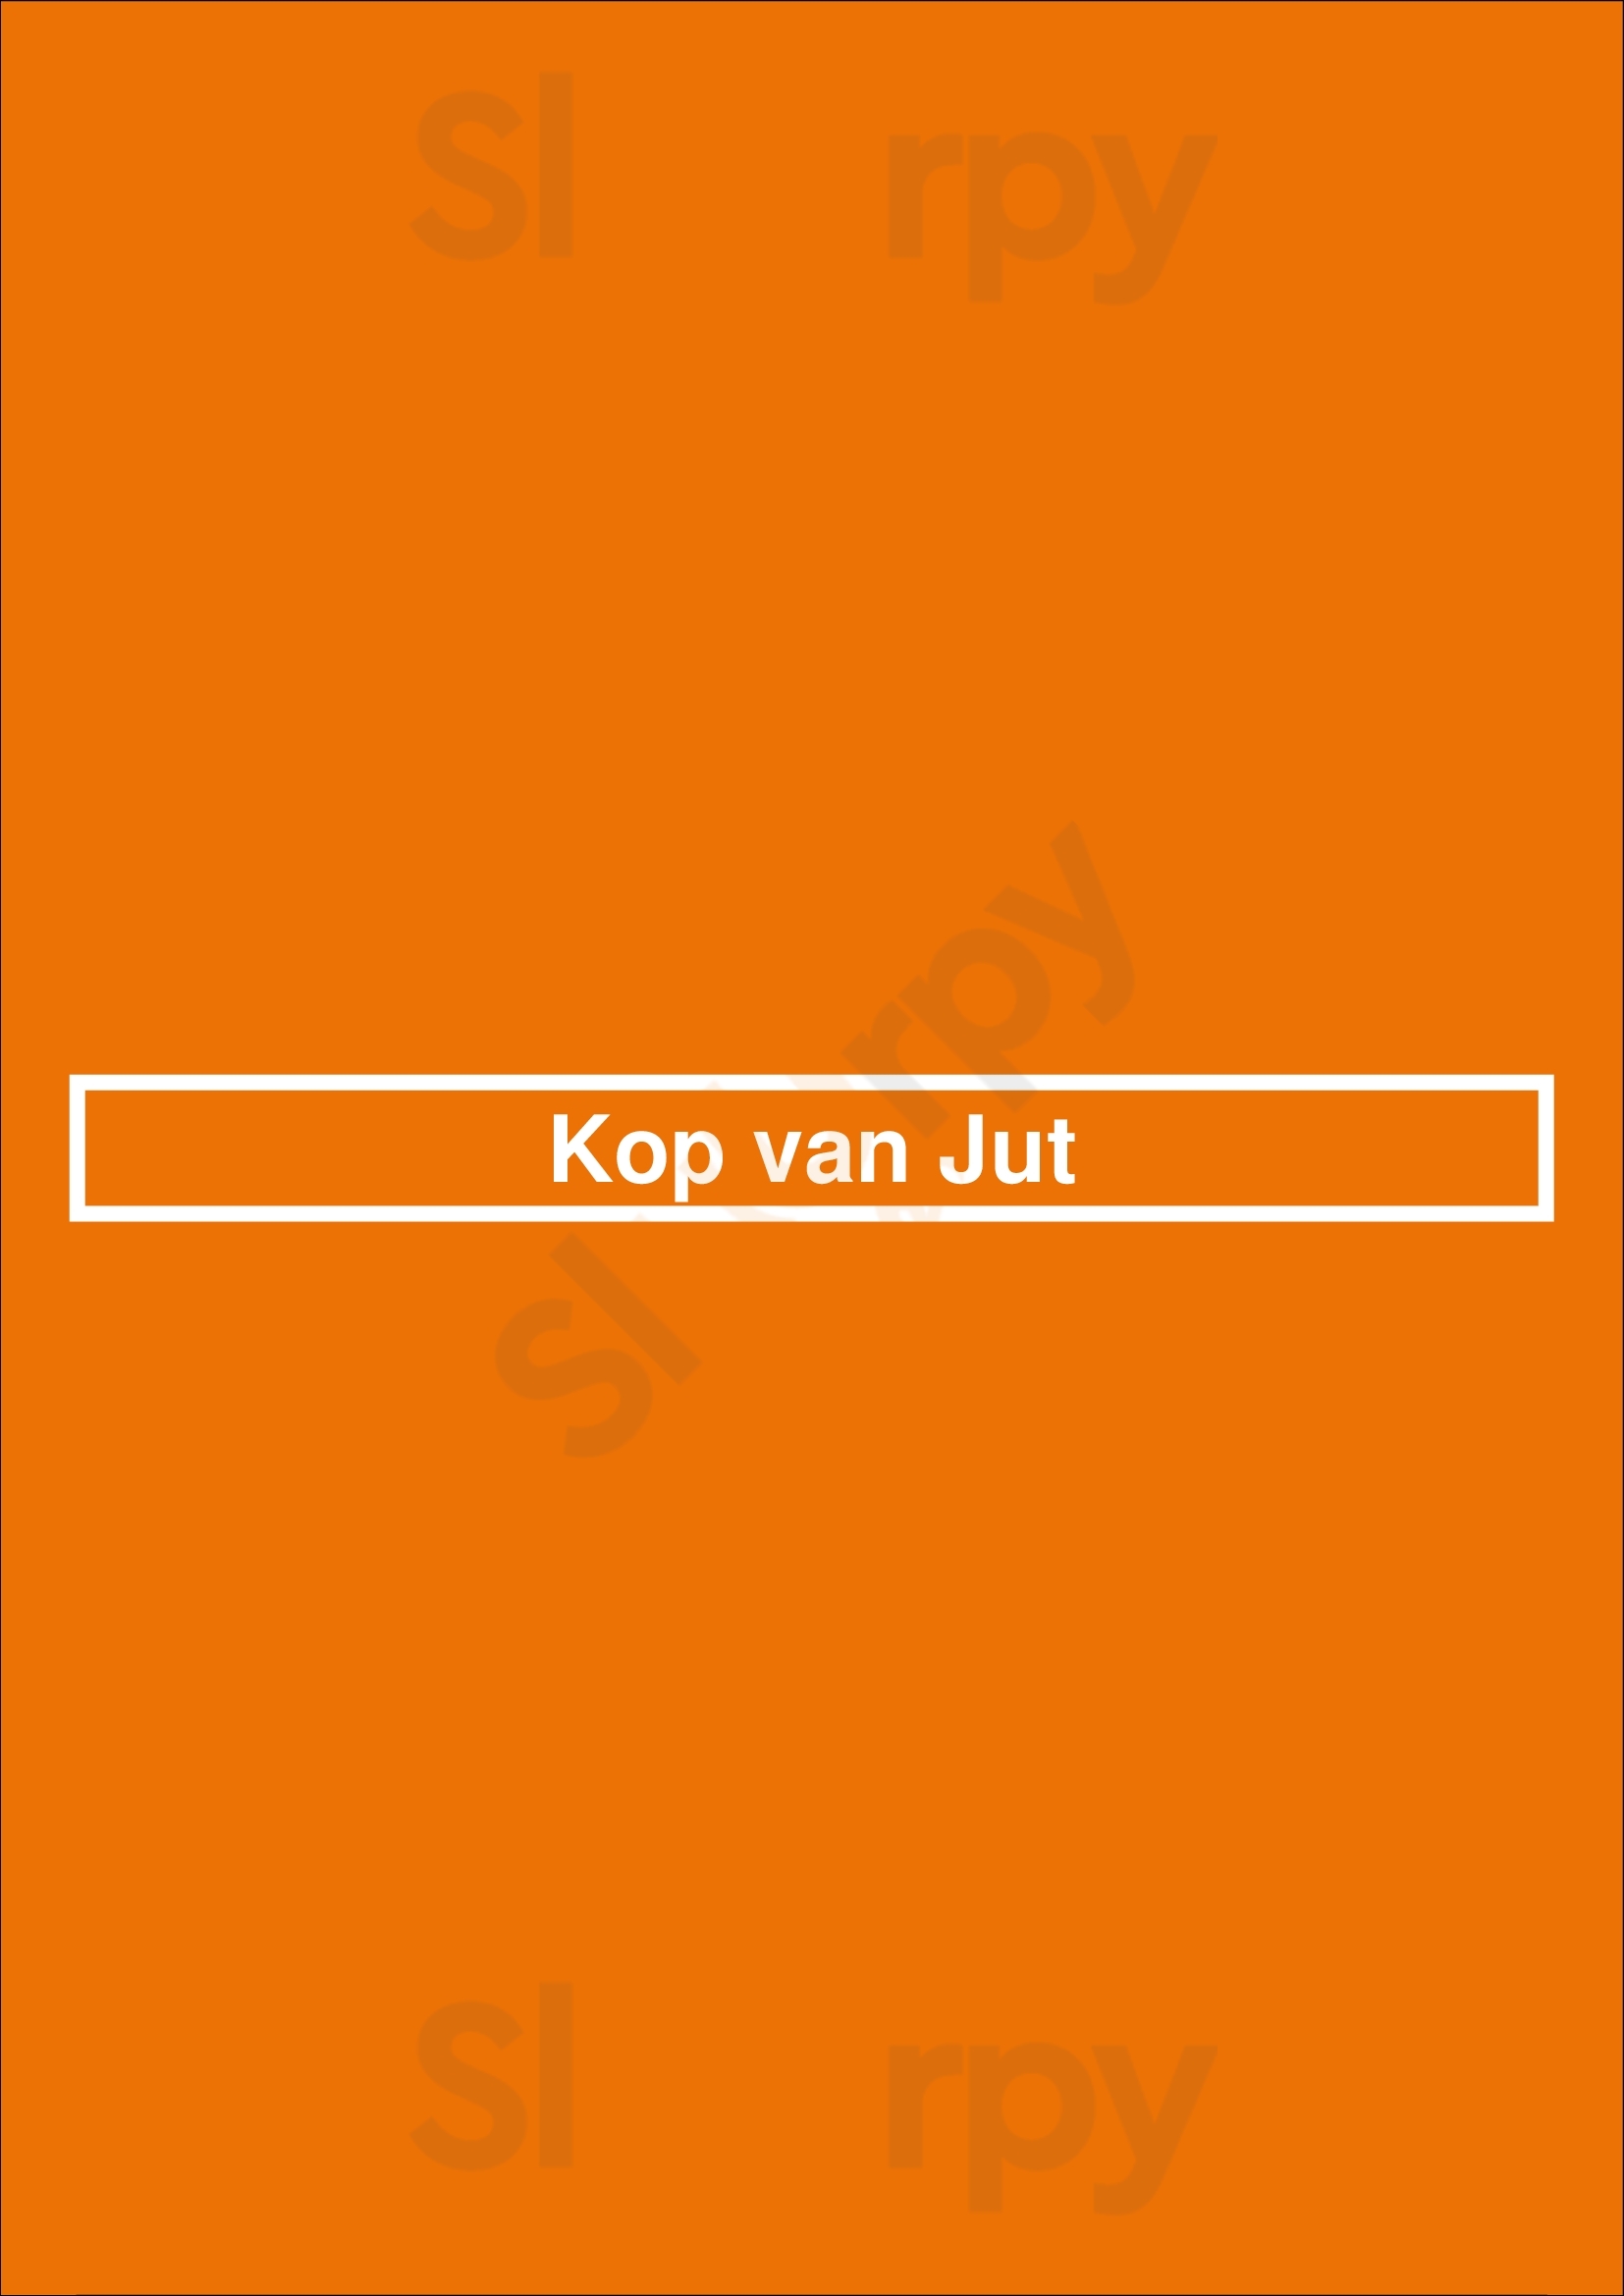 Kop Van Jut Amsterdam Menu - 1